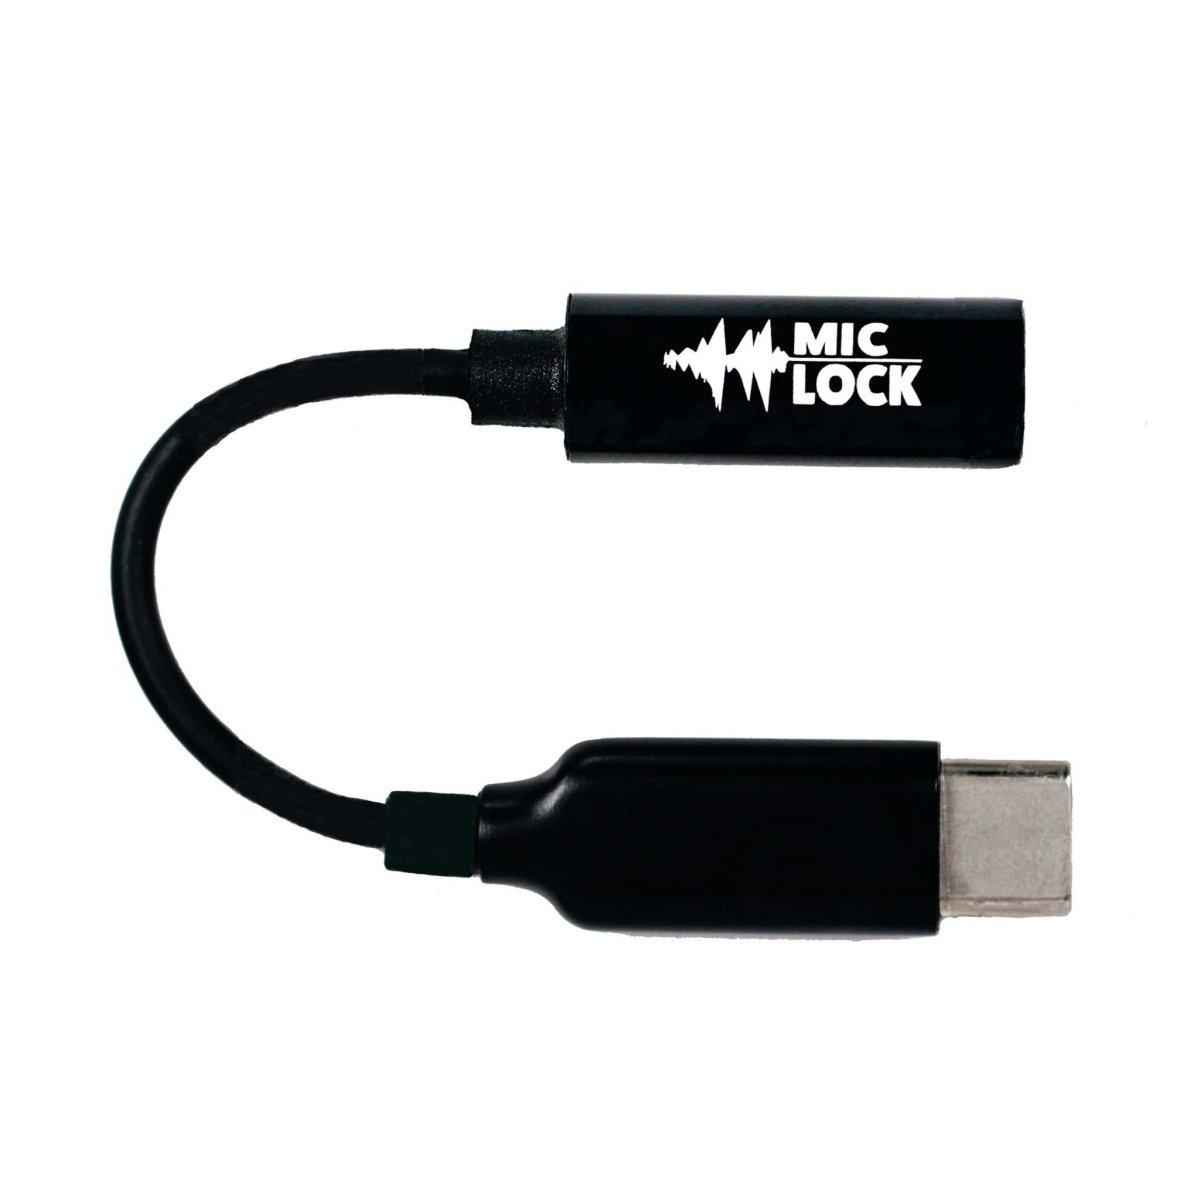 Mic-Lock Apple Privacy Pack - Mic-Lock